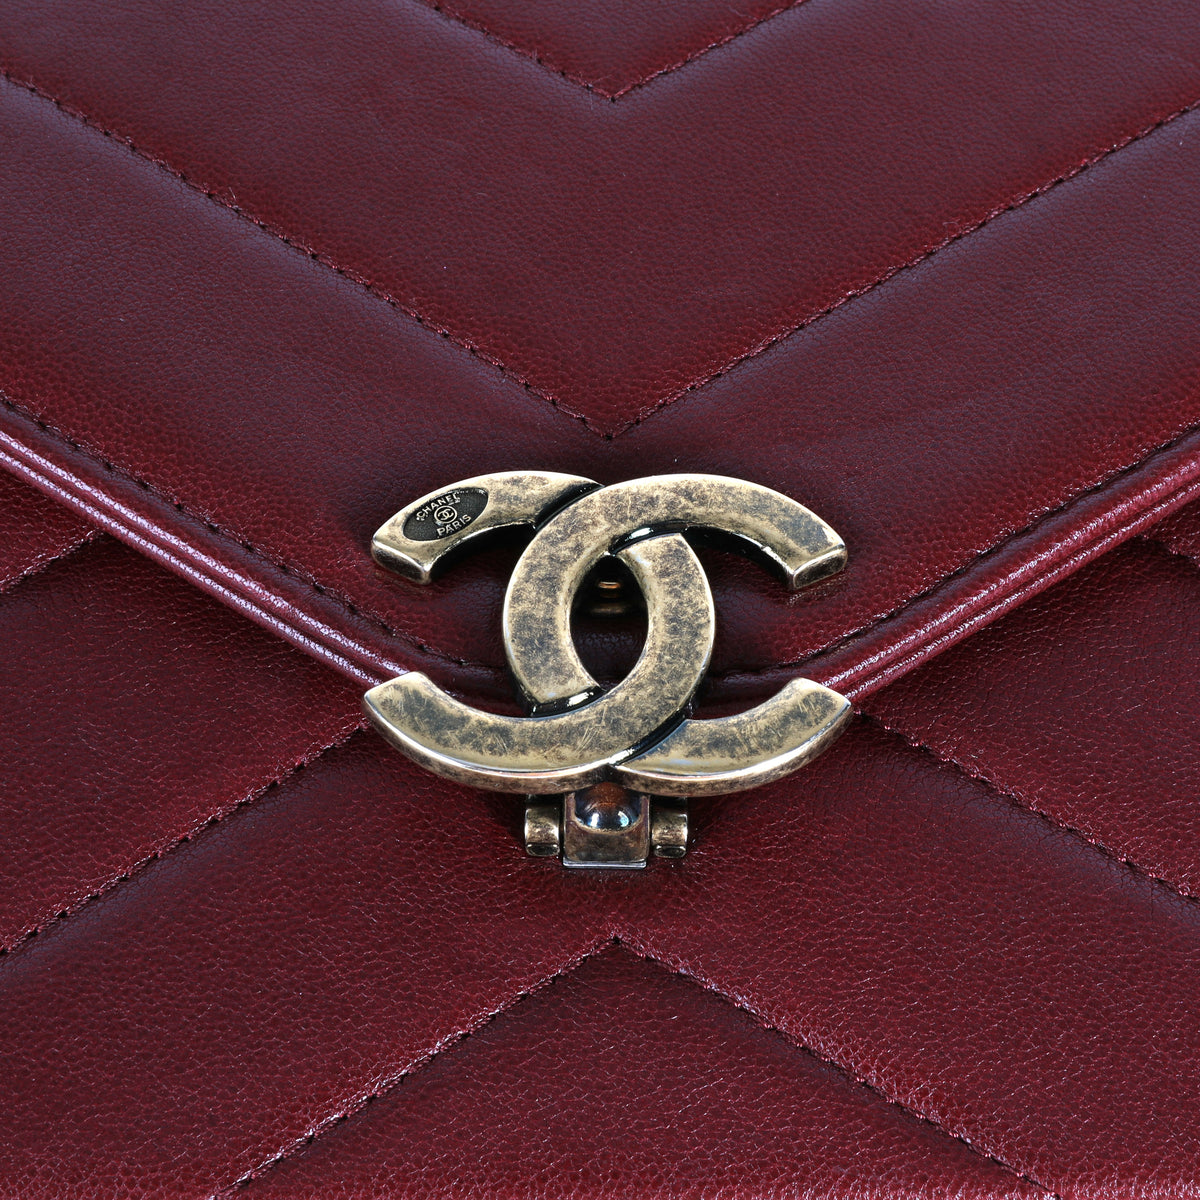 Chanel Coco Envelope Flap Bag Chevron Leather Mini